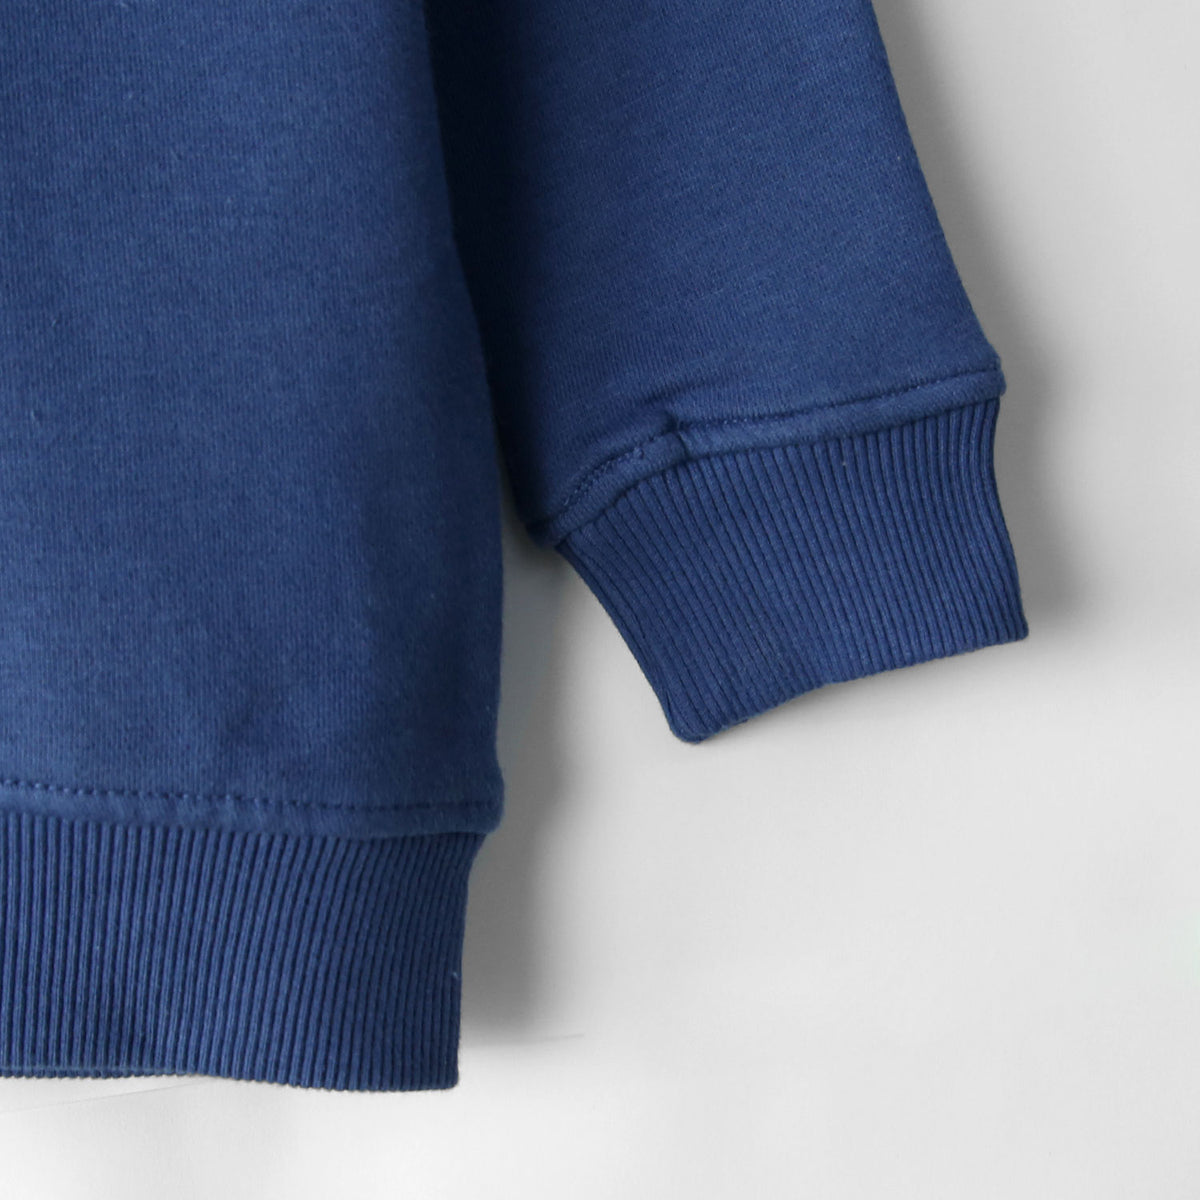 Premium Quality Embroidered Fleece Blue Sweatshirt For Kids